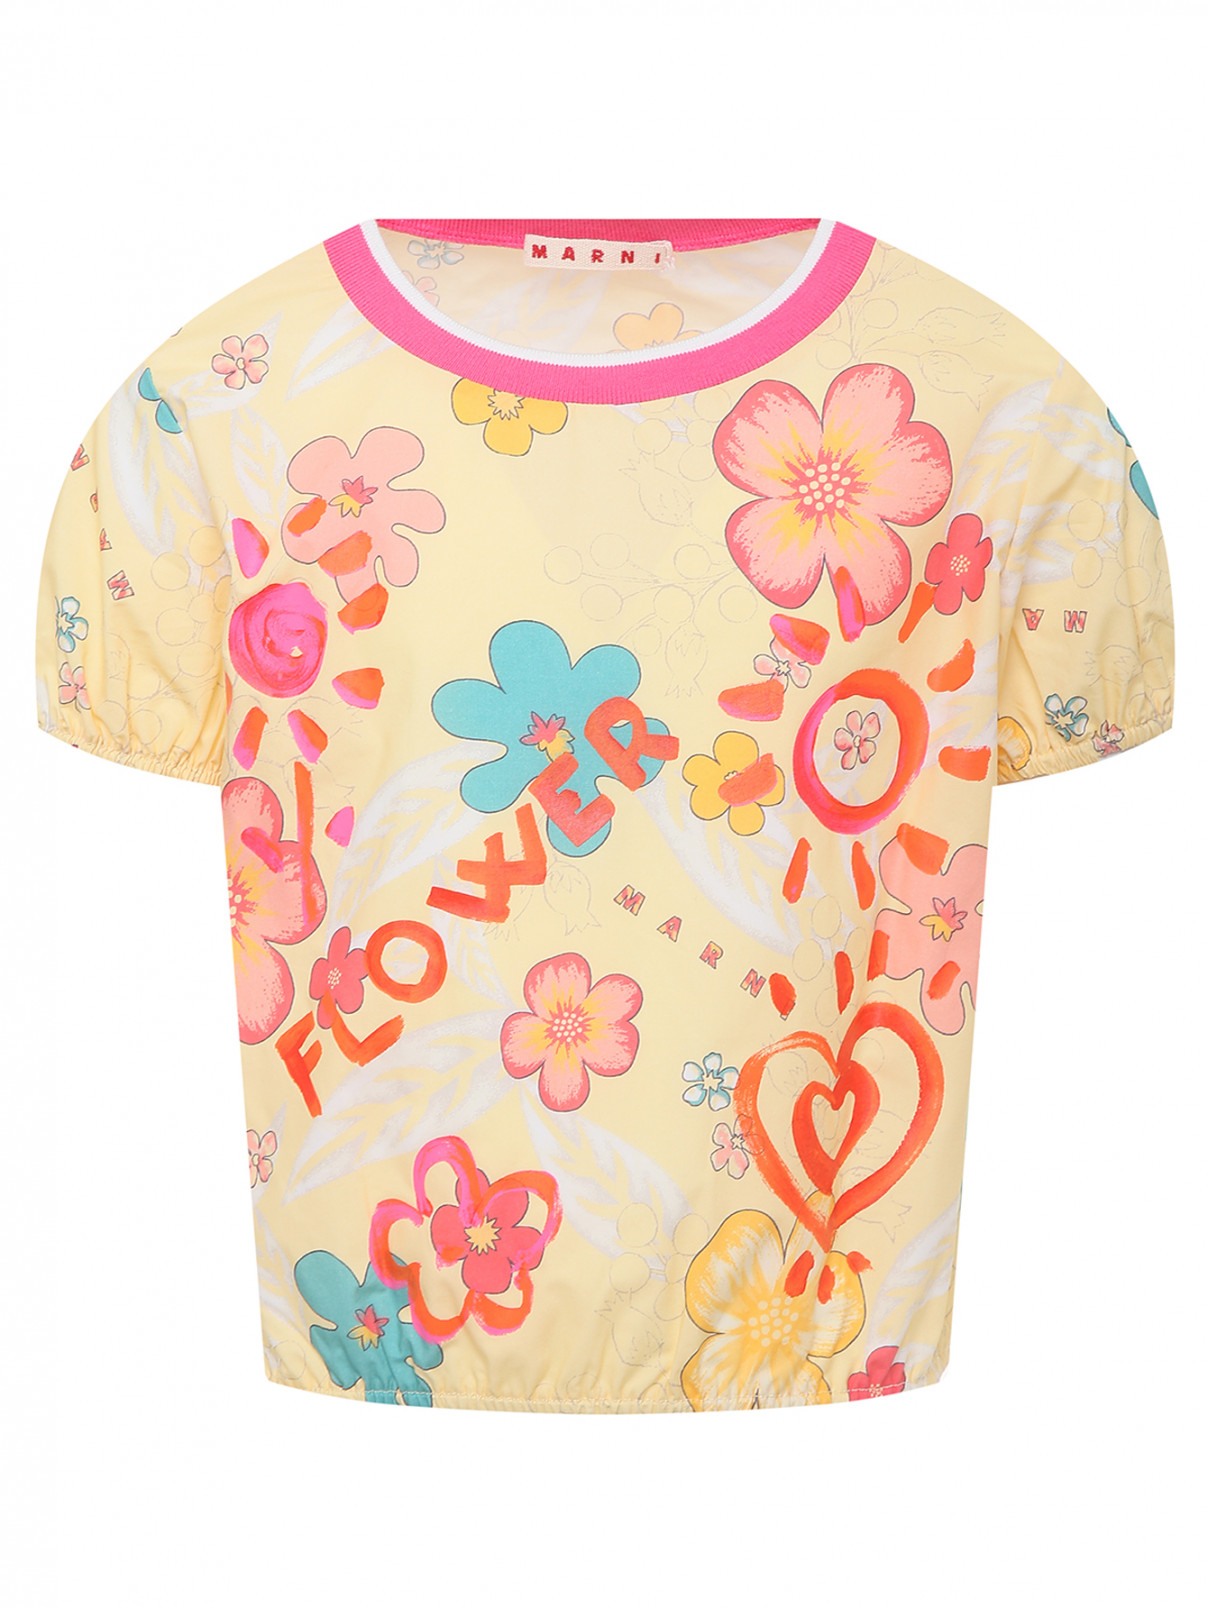 Хлопковая блуза с узором Marni  –  Общий вид  – Цвет:  Узор